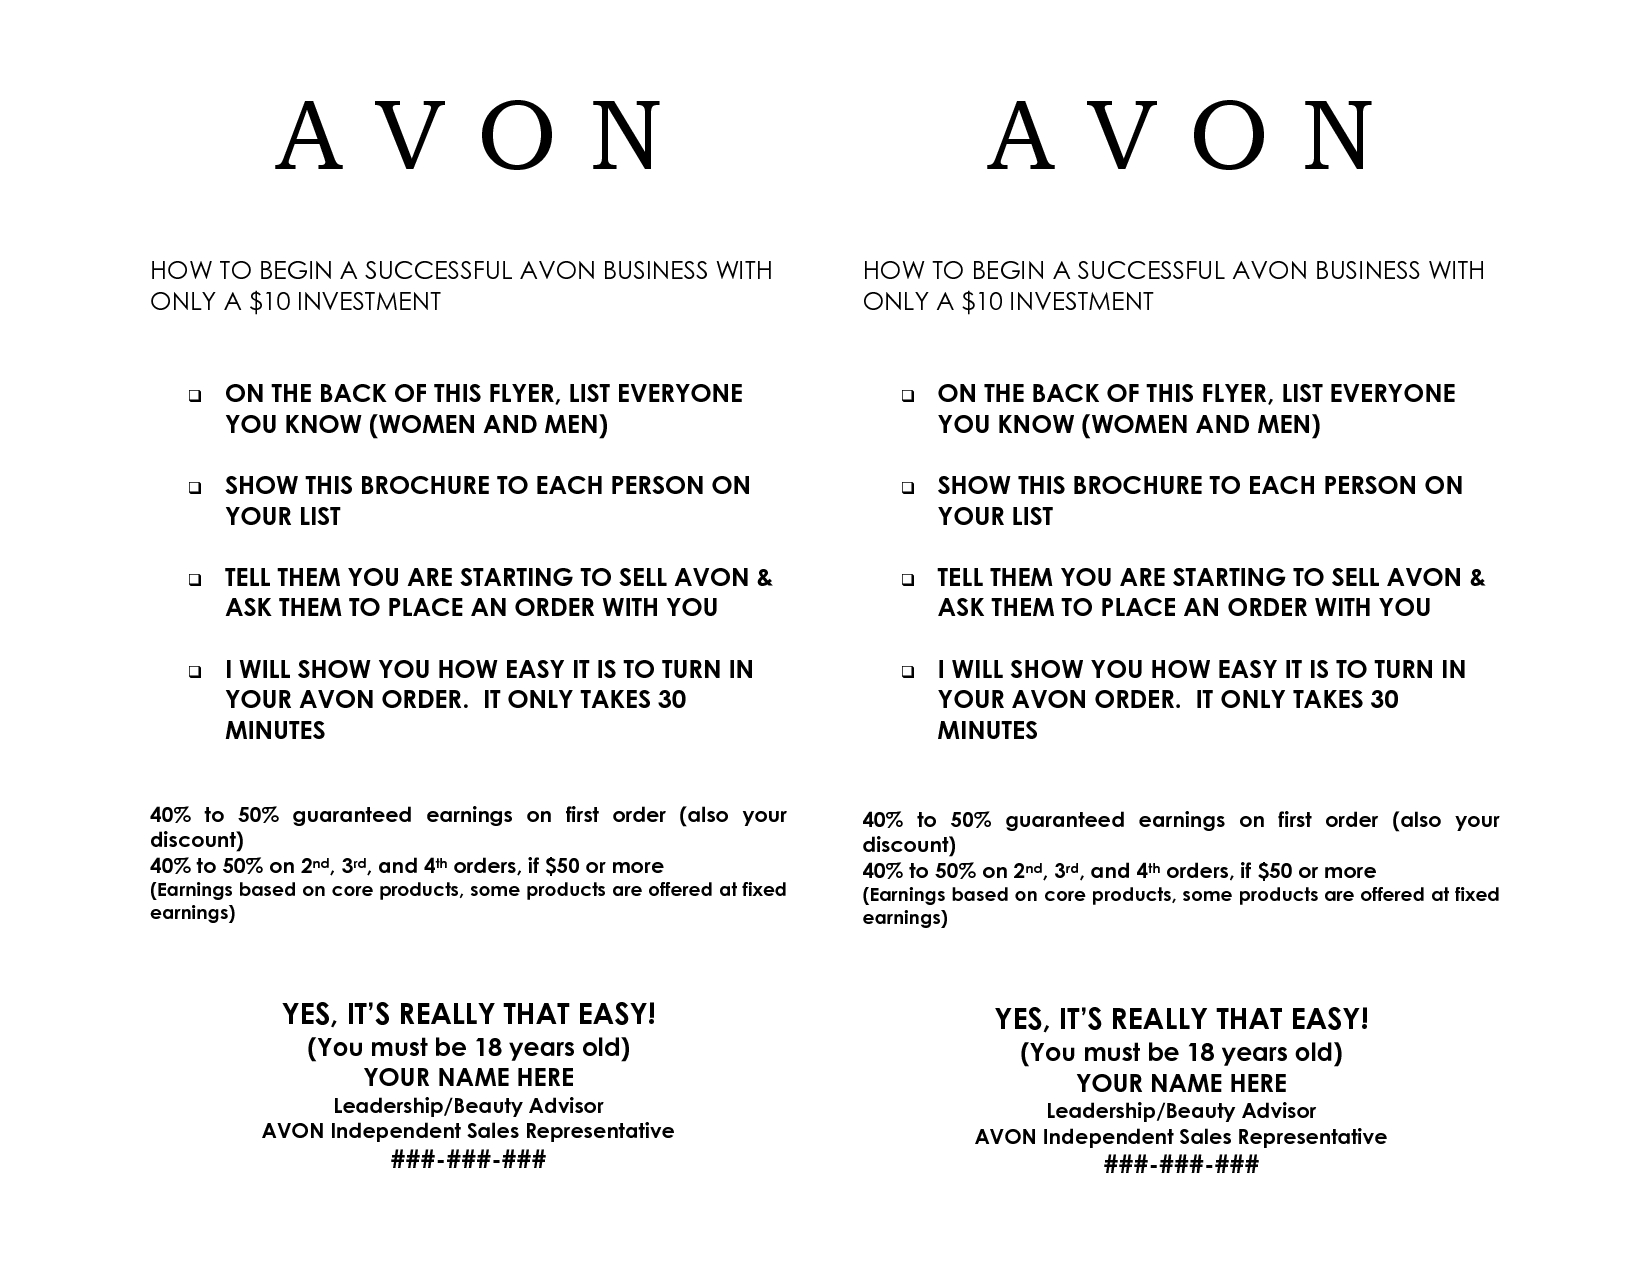 Avon Flyers | Avon Business | Avon | Pinterest | Avon, Avon - Free Printable Avon Flyers